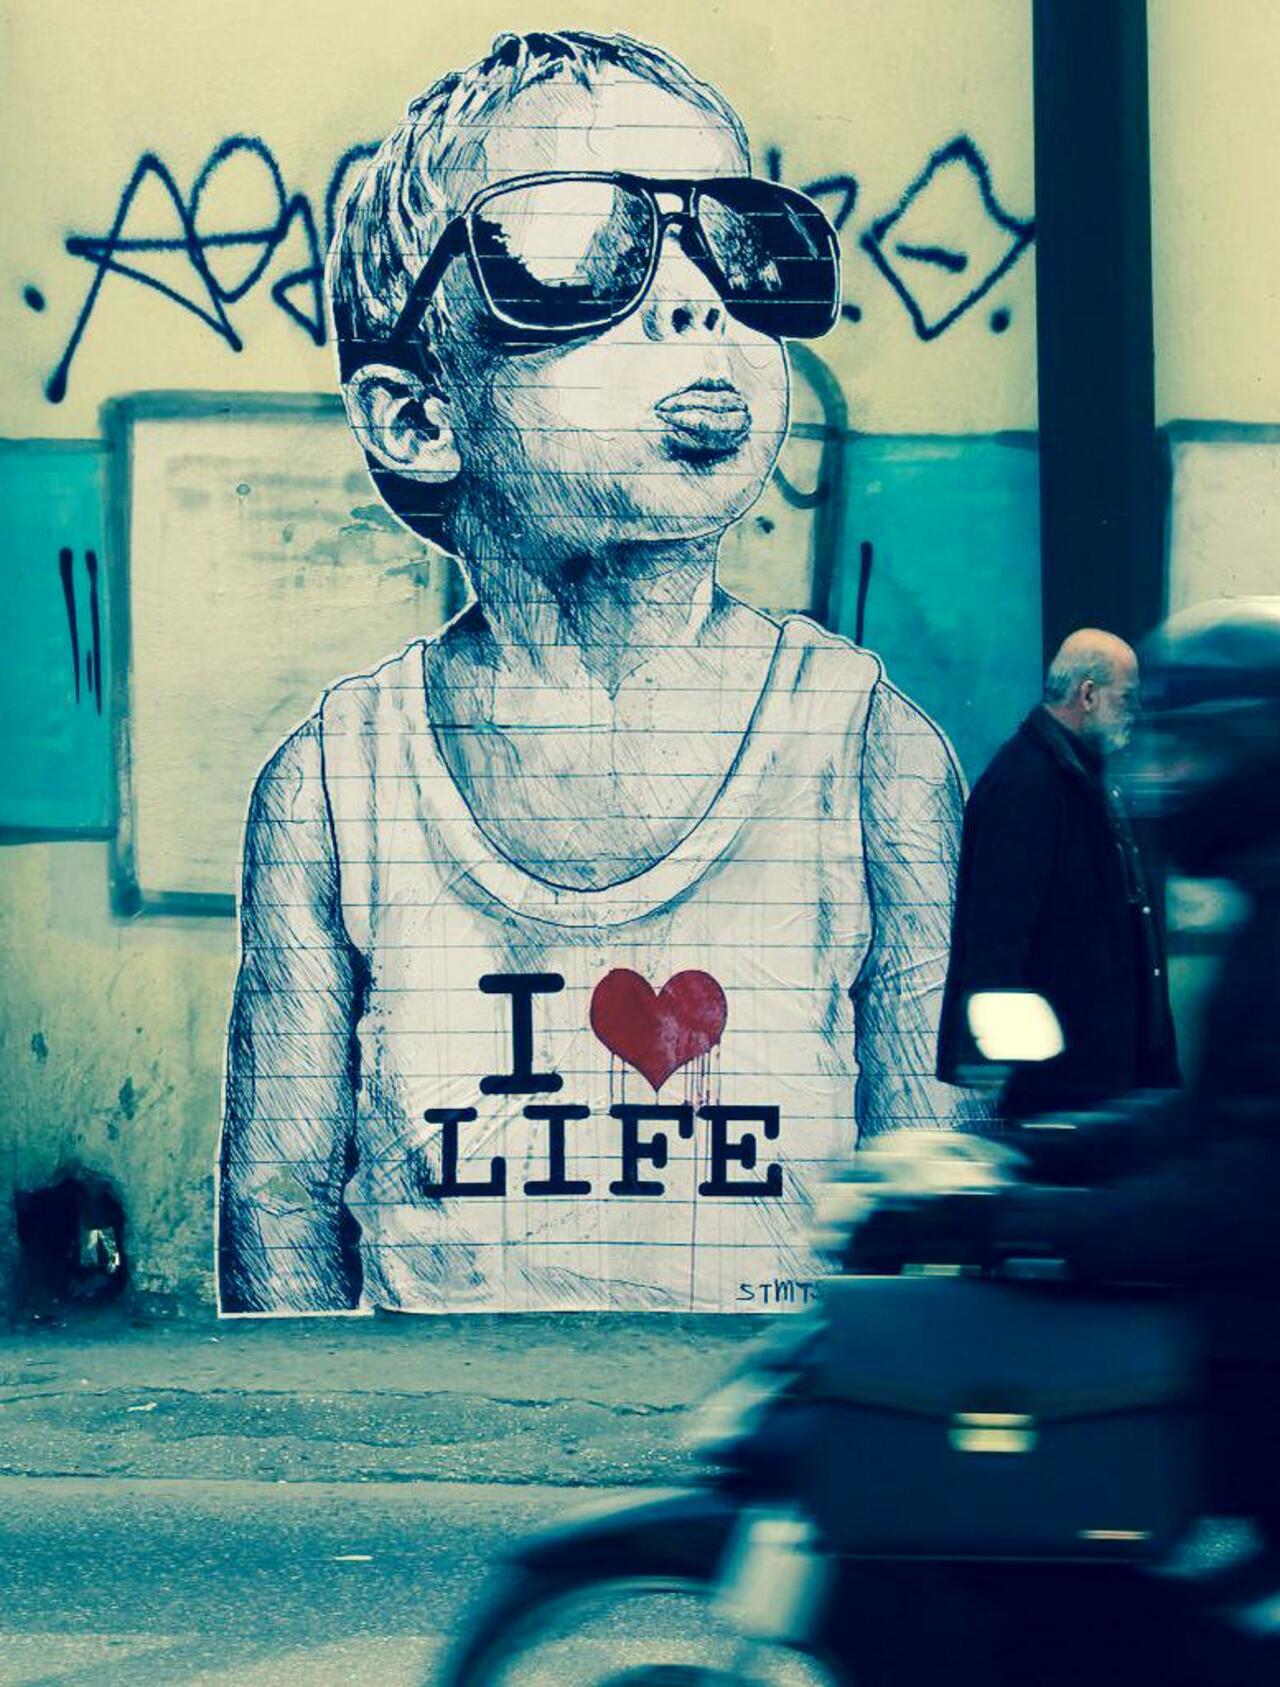 #life #sticker #StreetArt #graffiti #urbanart #murales #mural http://t.co/24cJUD4XOh